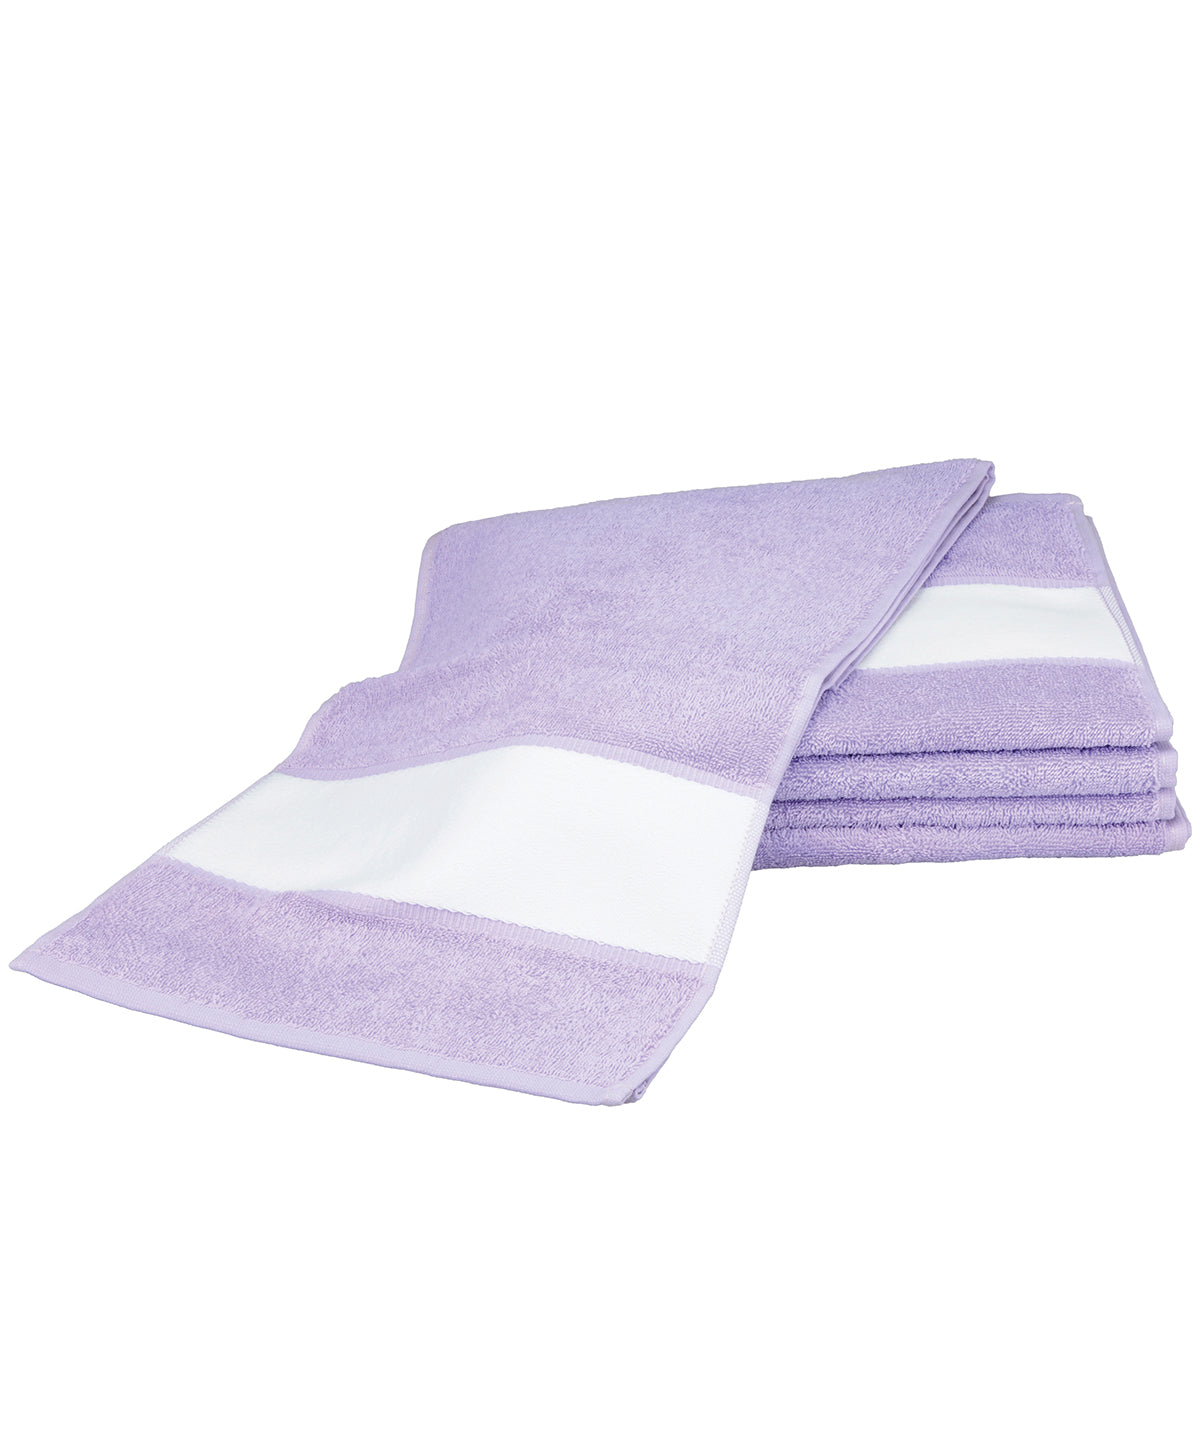 Personalised Towels - Light Purple A&R Towels ARTG® SUBLI-Me® sport towel